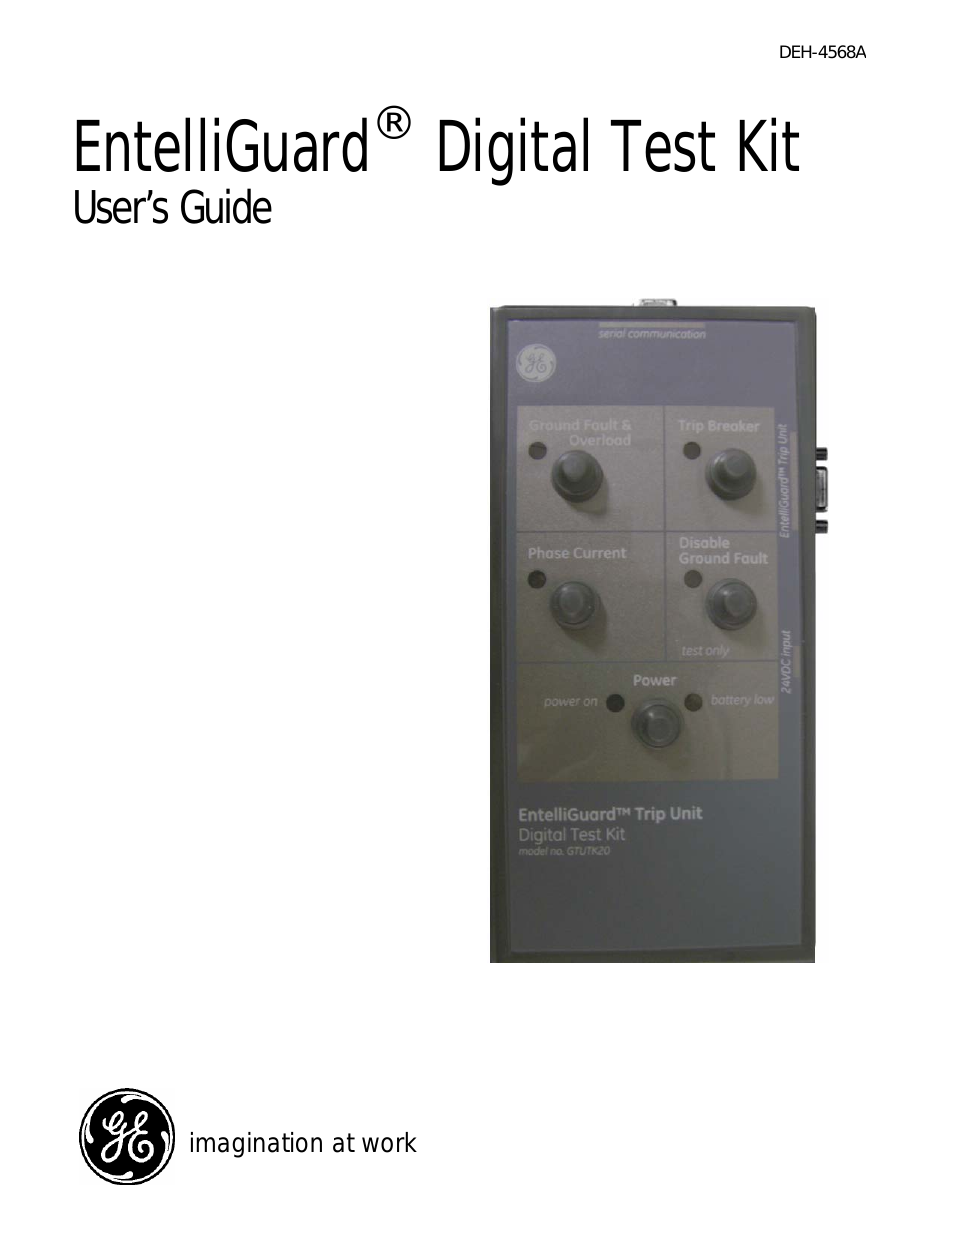 EntelliGuard G Digital Test Kit